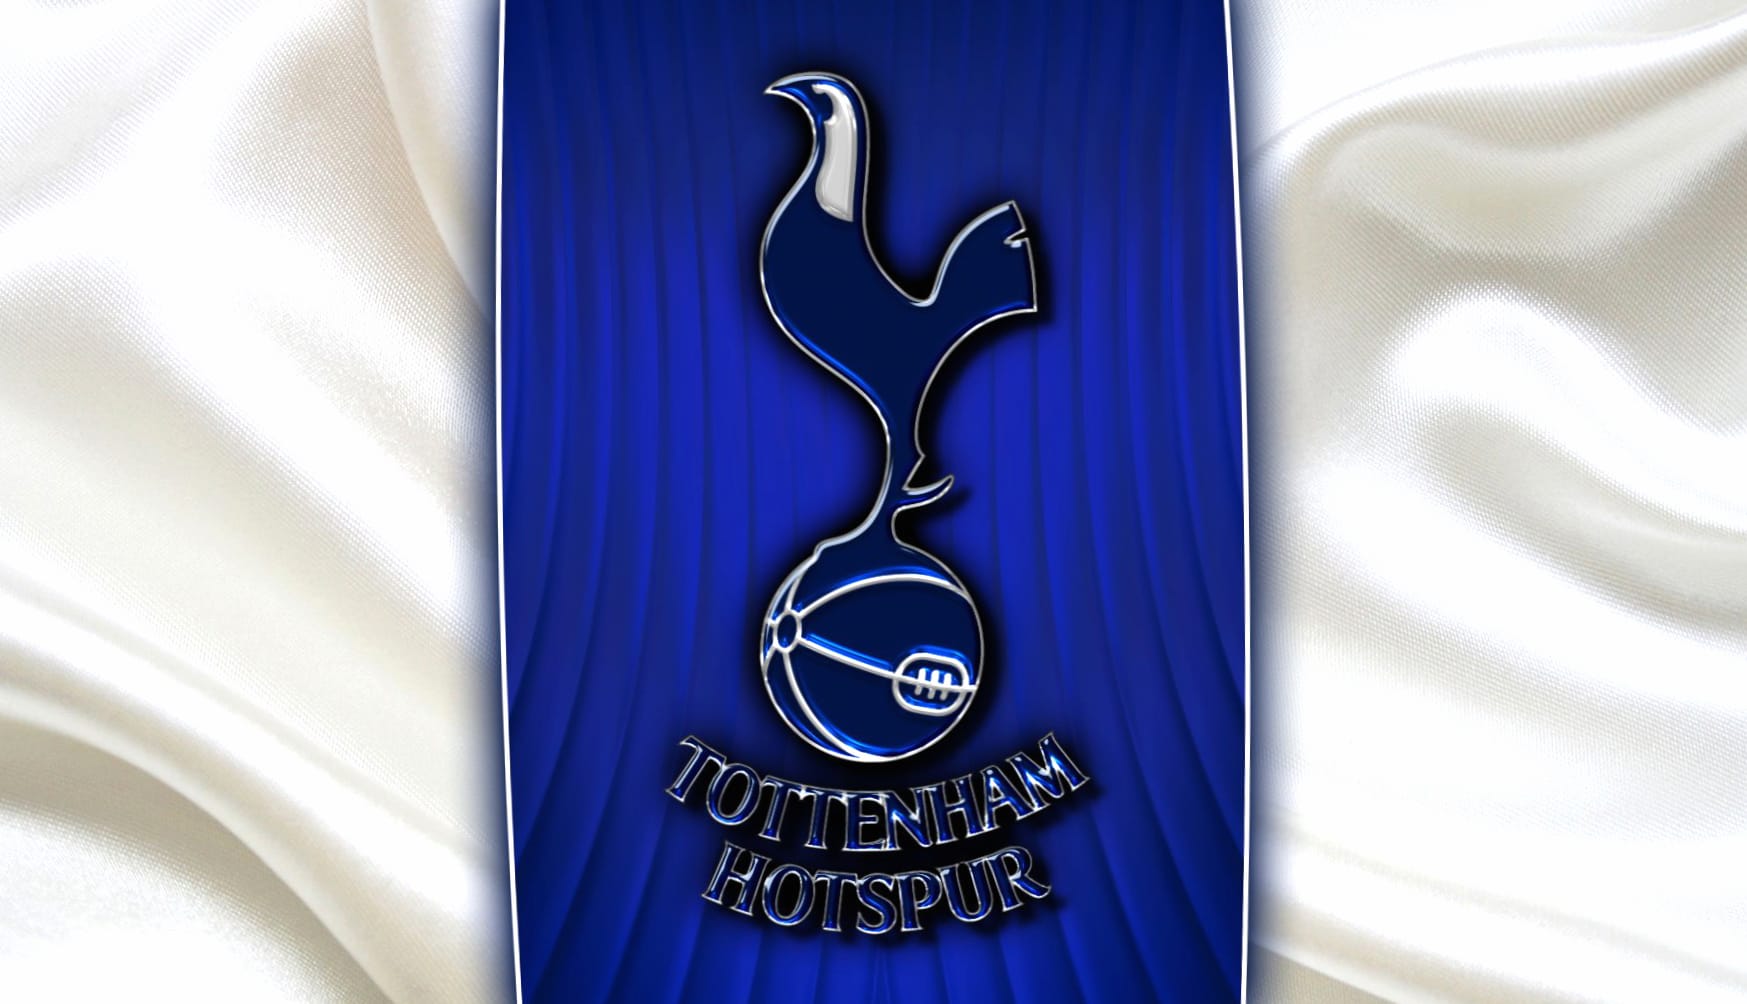 Tottenham Hotspur F.C at 1024 x 1024 iPad size wallpapers HD quality